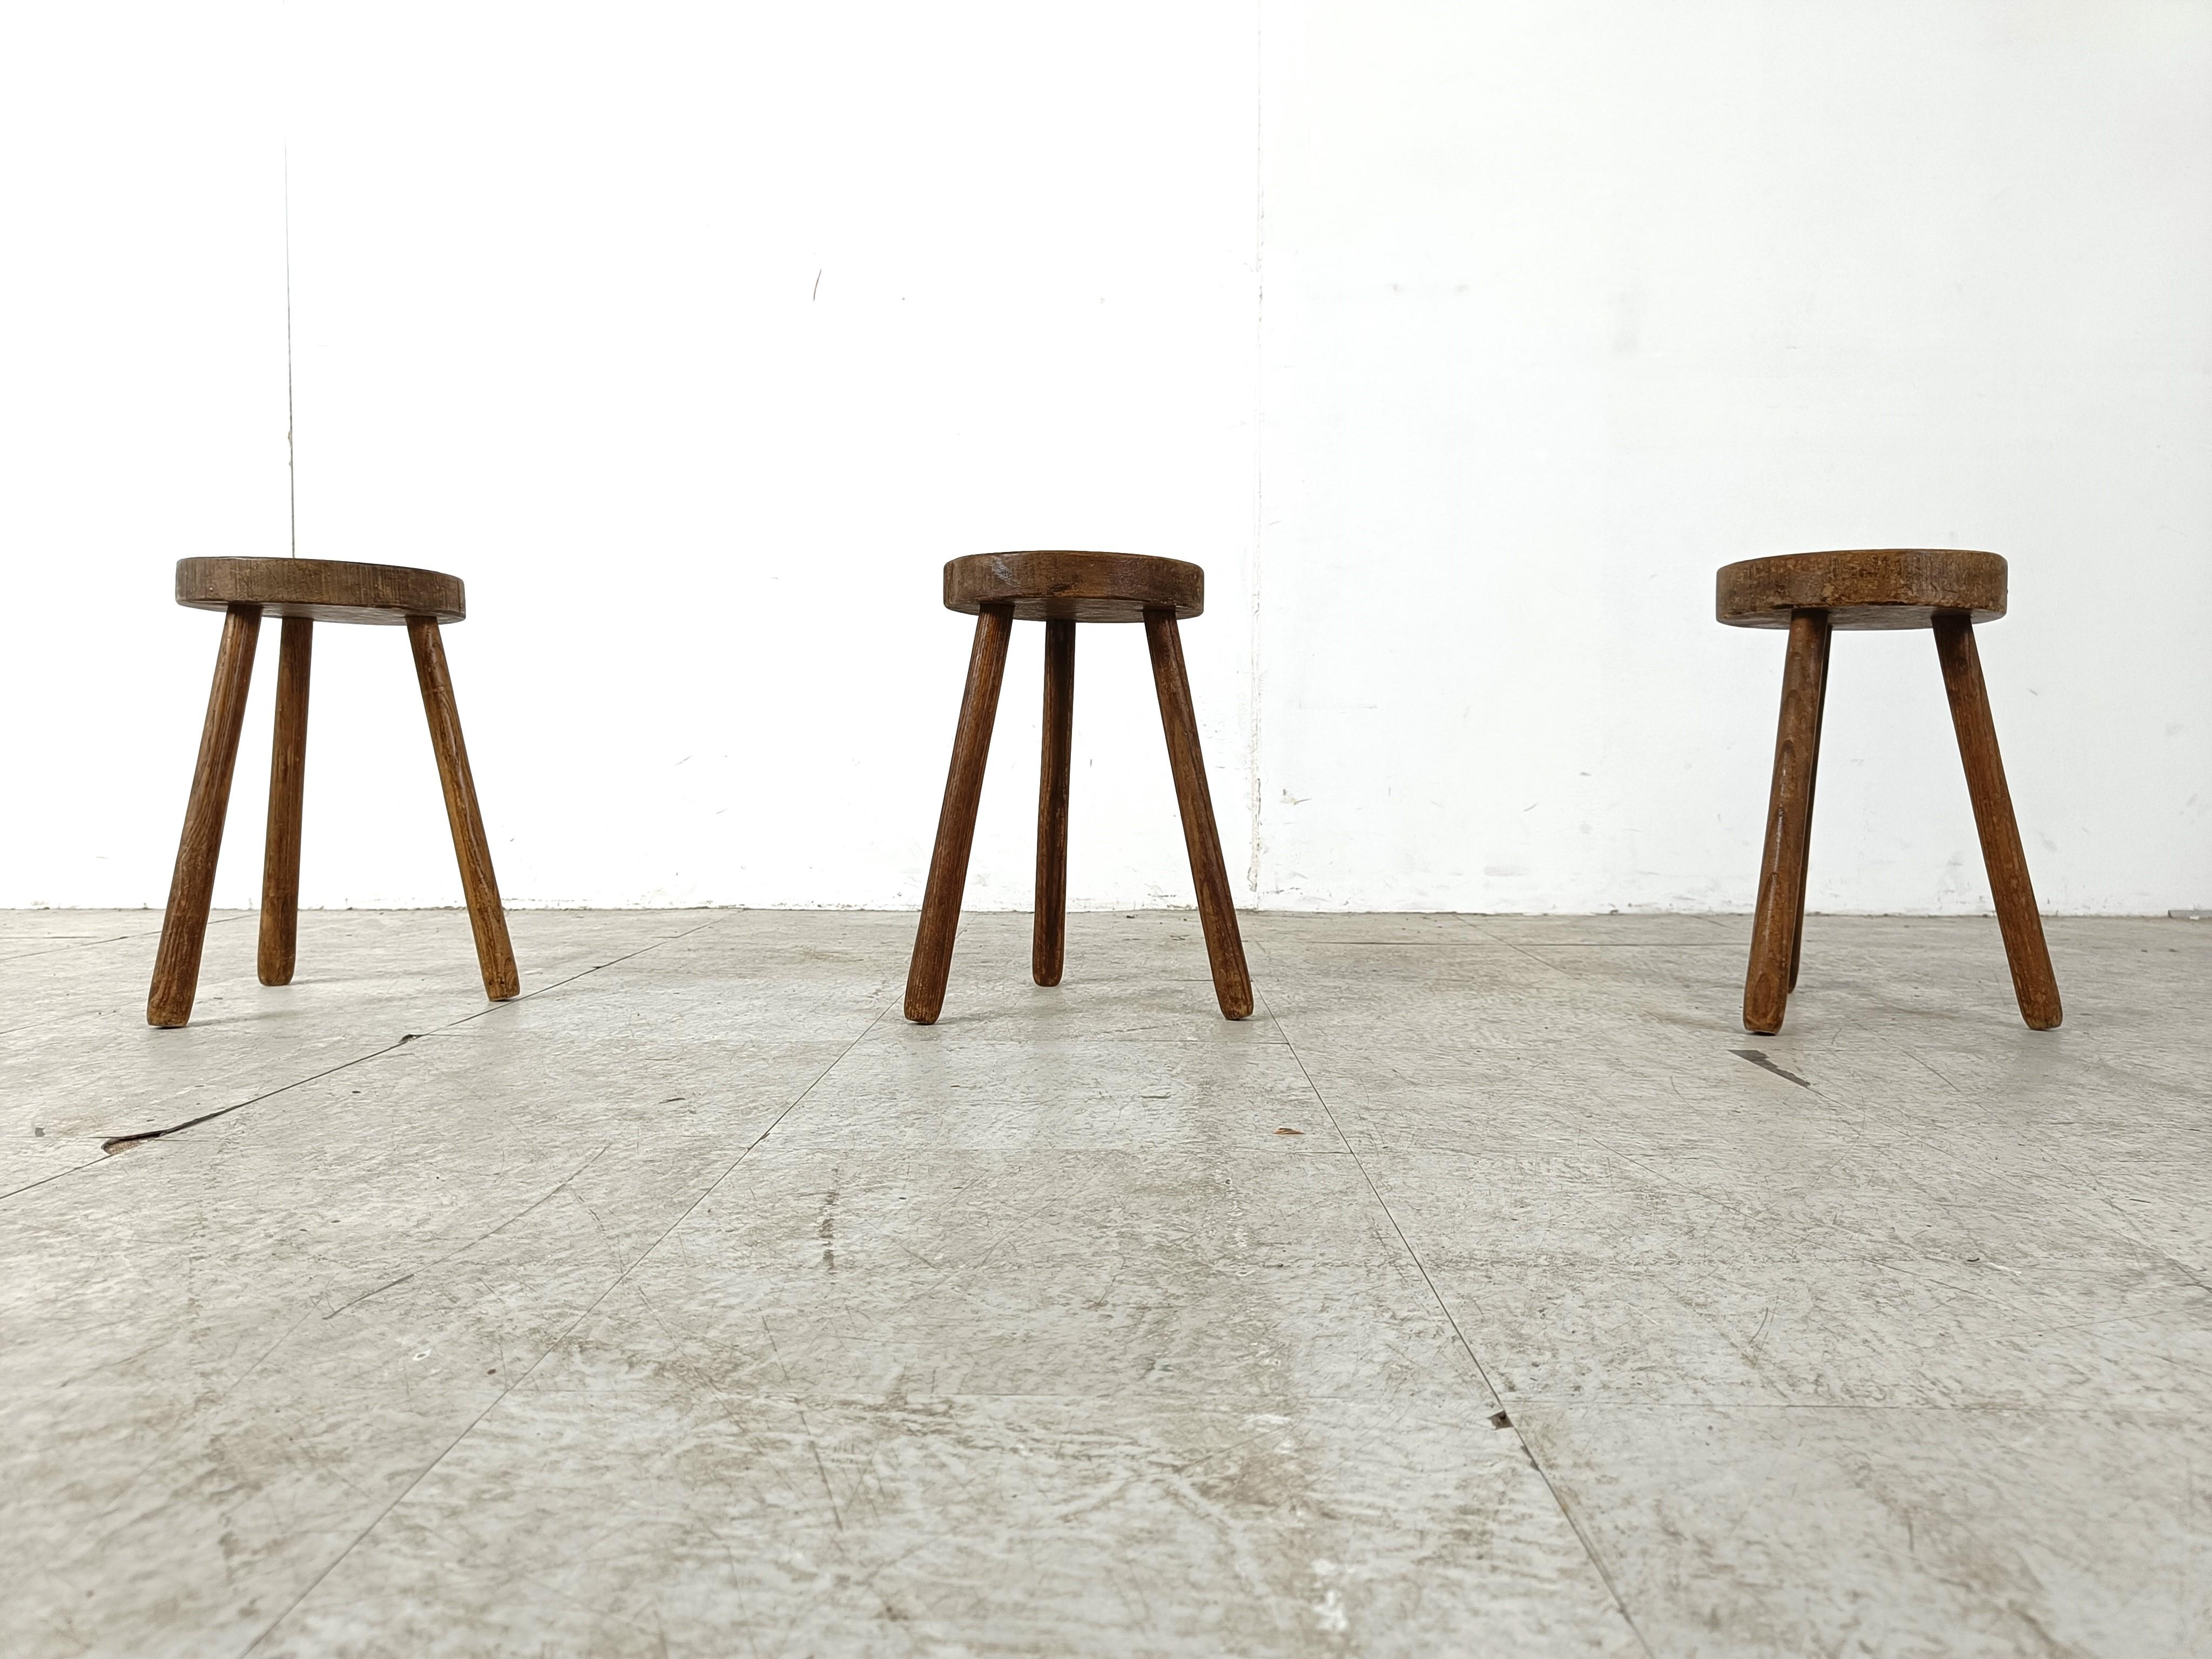 Primitive handmade oak farm stools, set of 3 

Timeless, decorative piece

1950s - France

Good condition

Dimensions:
Height: 35cm/13.77